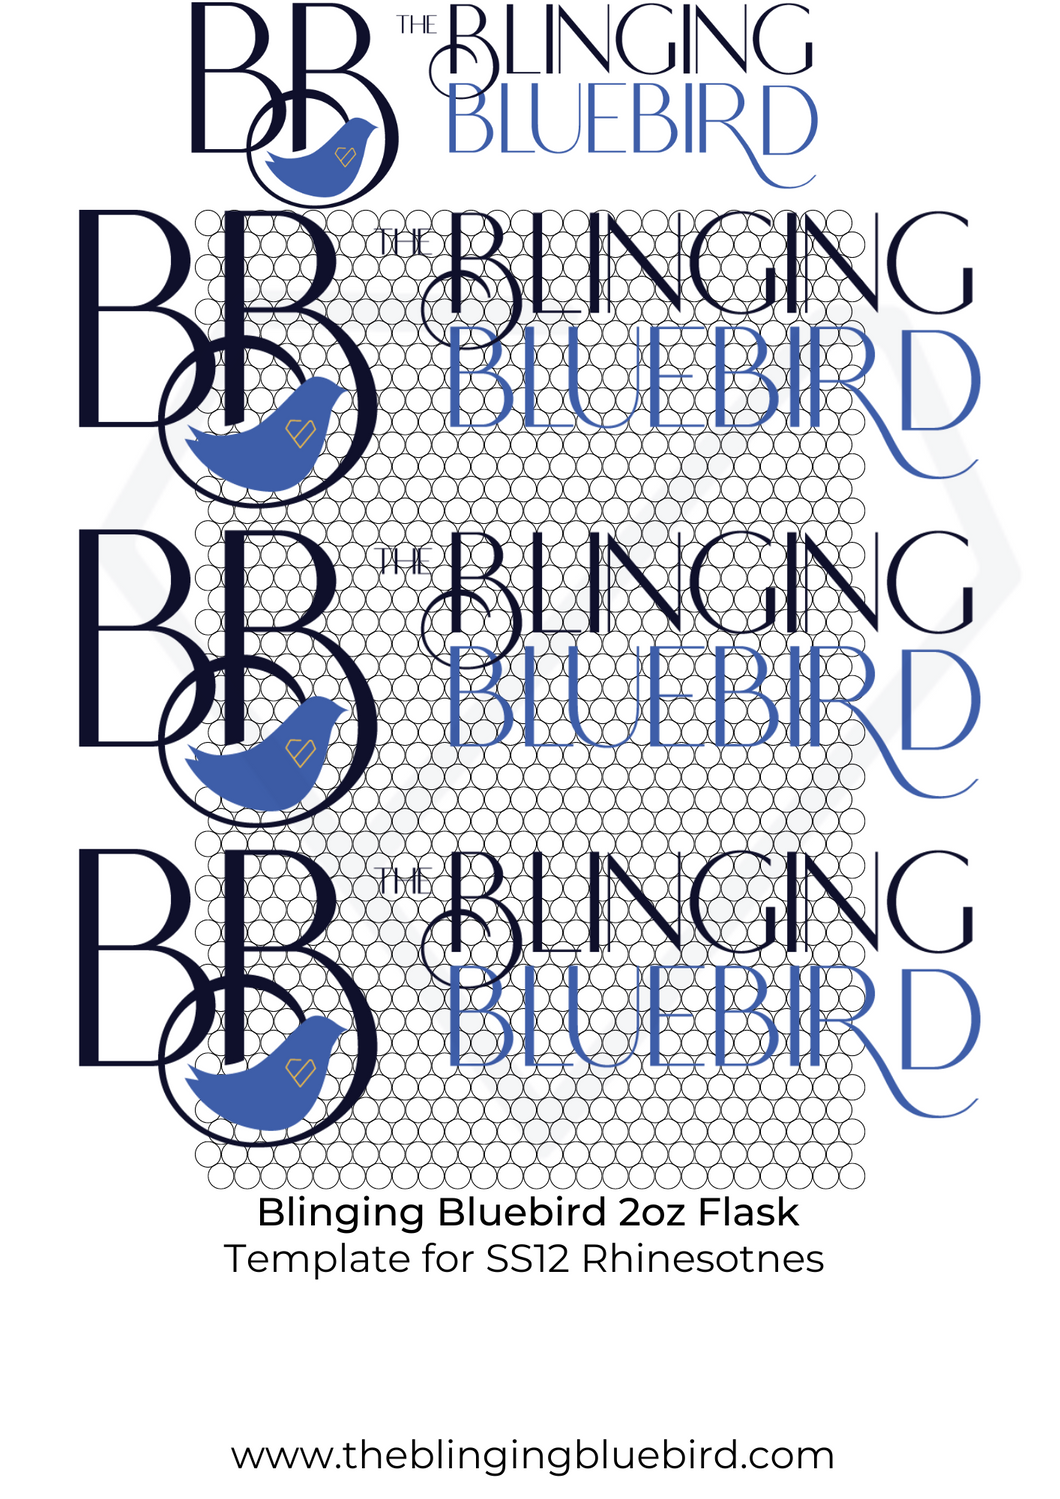 SS12 -2oz Blinging Bluebird Flask Honeycomb Pattern Template